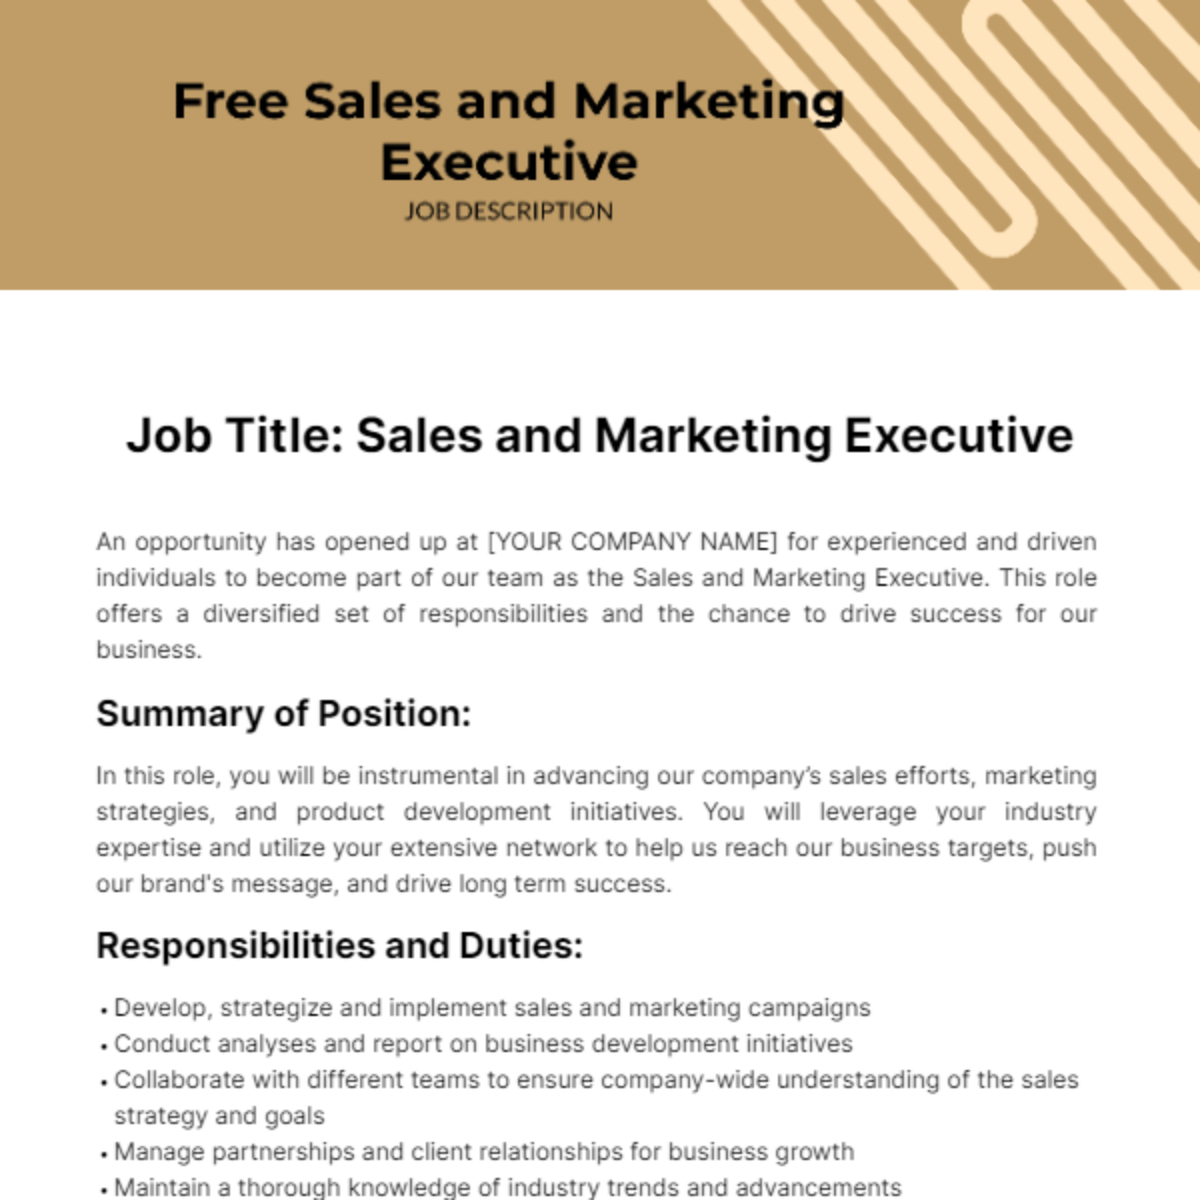 Sales and Marketing Executive Job Description Template